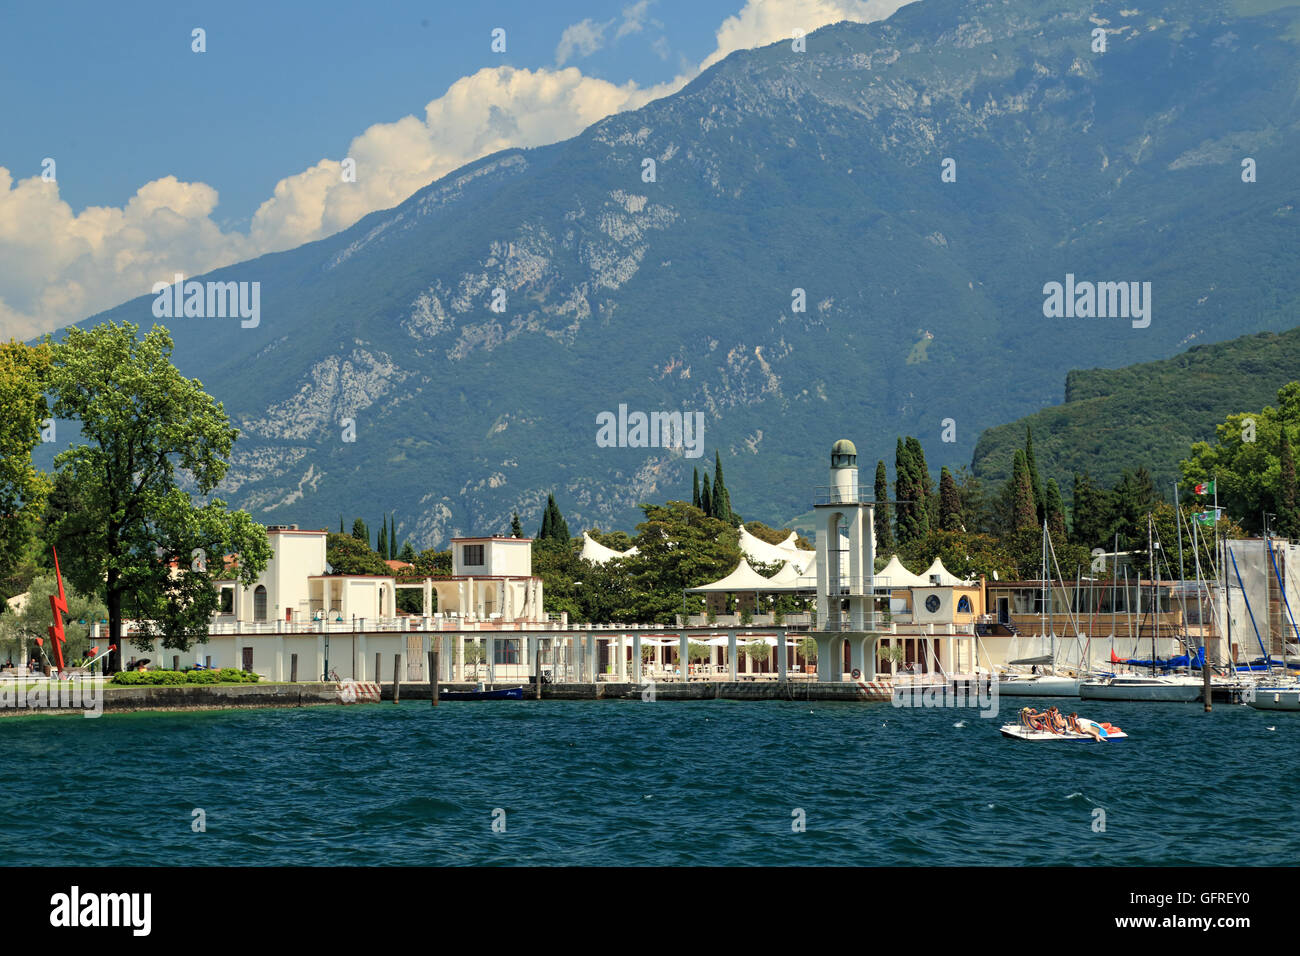 Spiaggia degli Olivi, Riva del Garda, Lake Garda, Lago di Garda, Gardasee, Italy Stock Photo